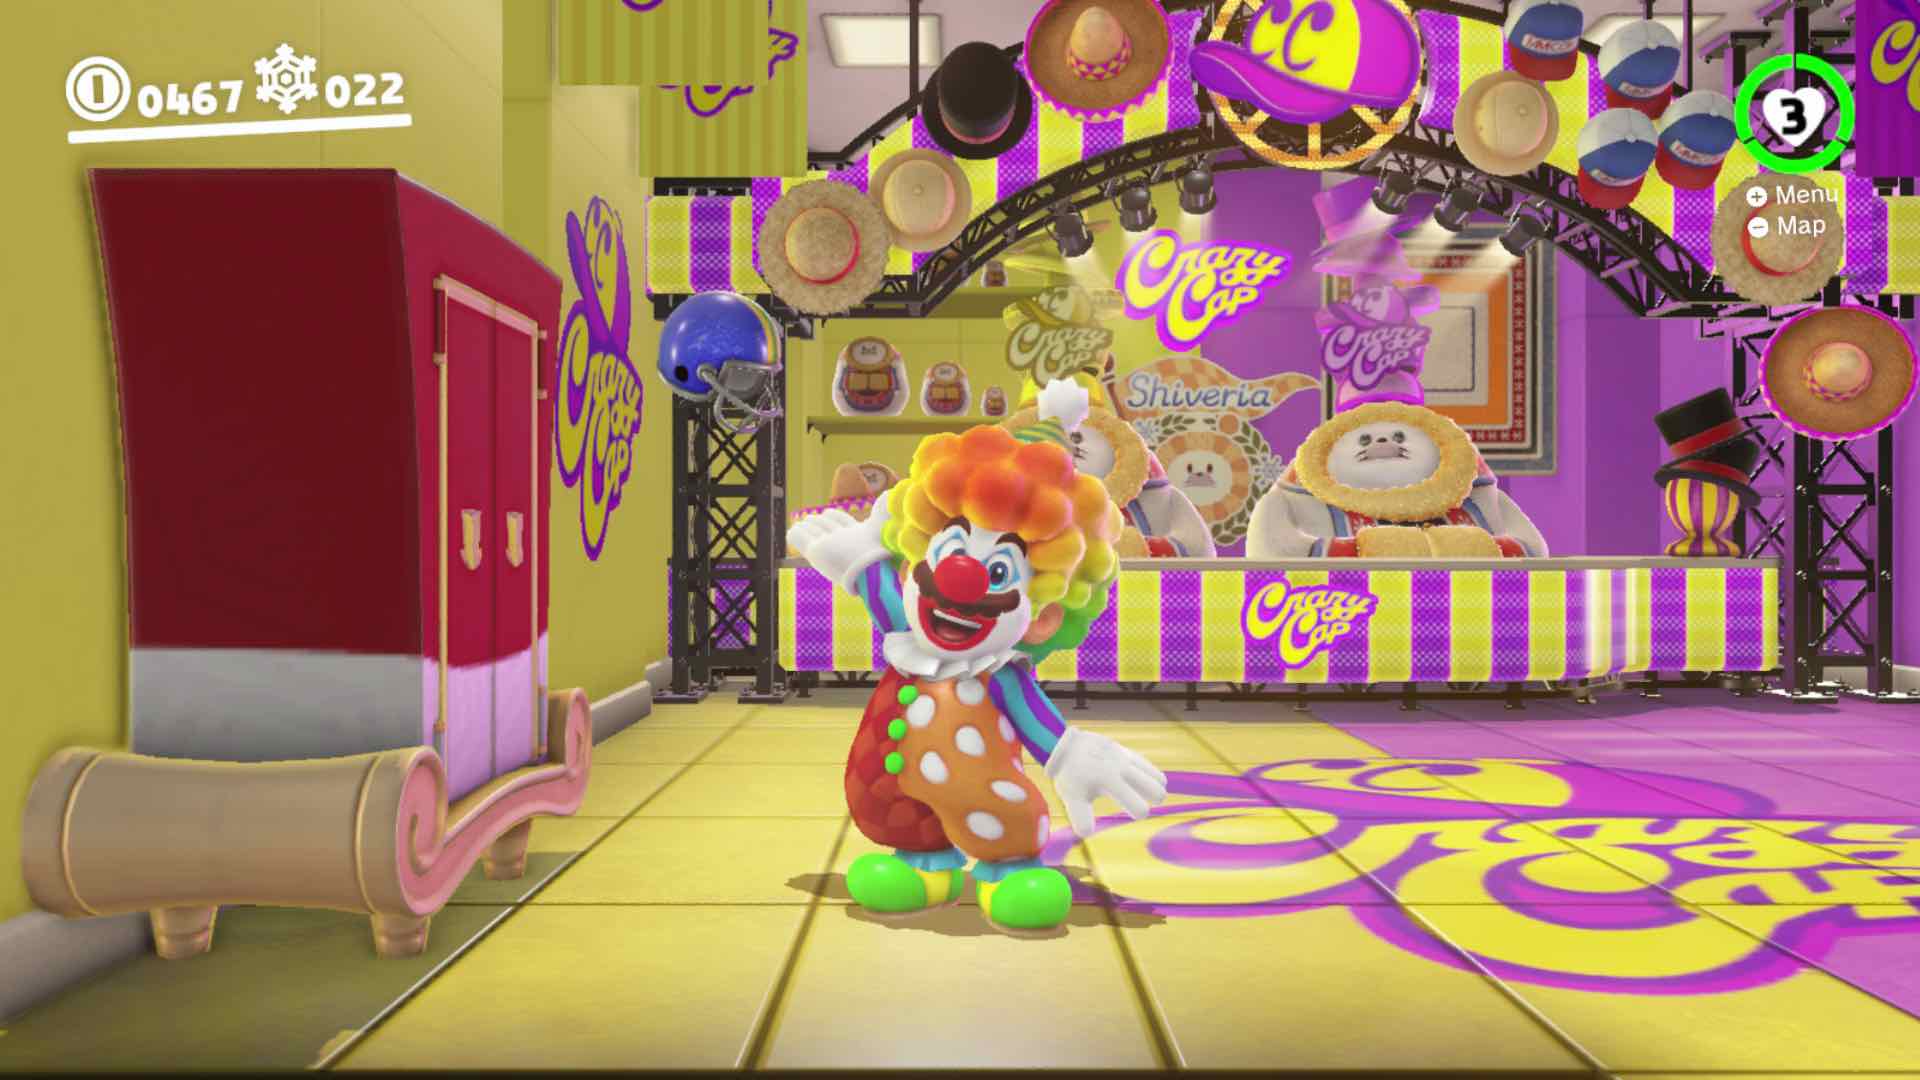 clown-suit-super-mario-odyssey-screenshot